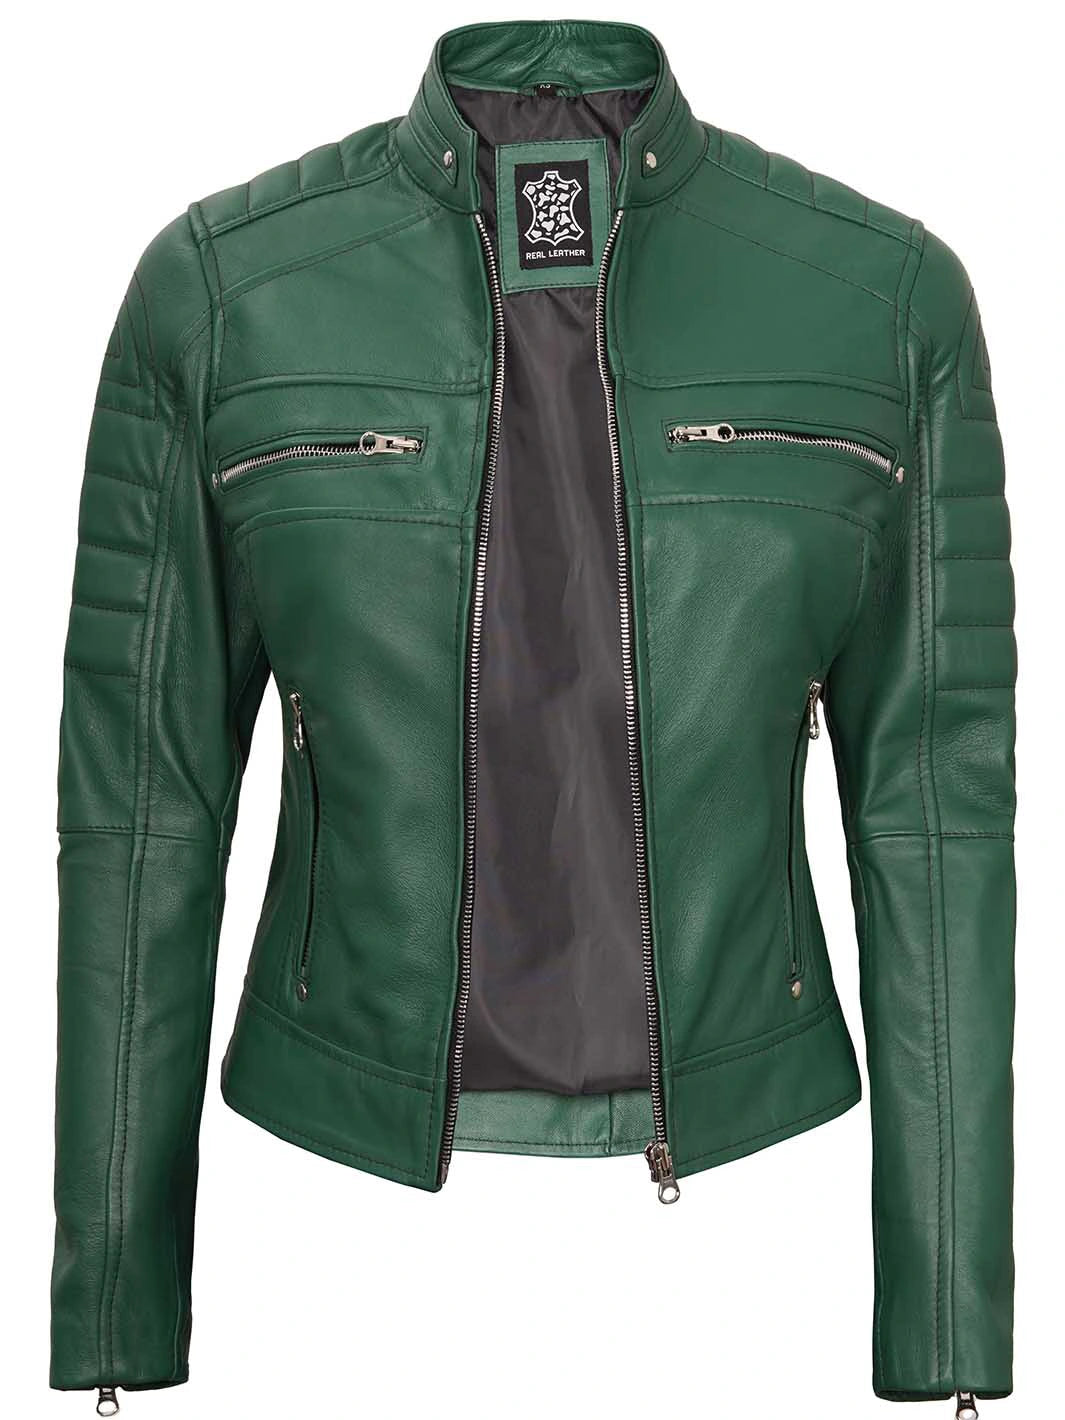 Cafe racer leather jacket 